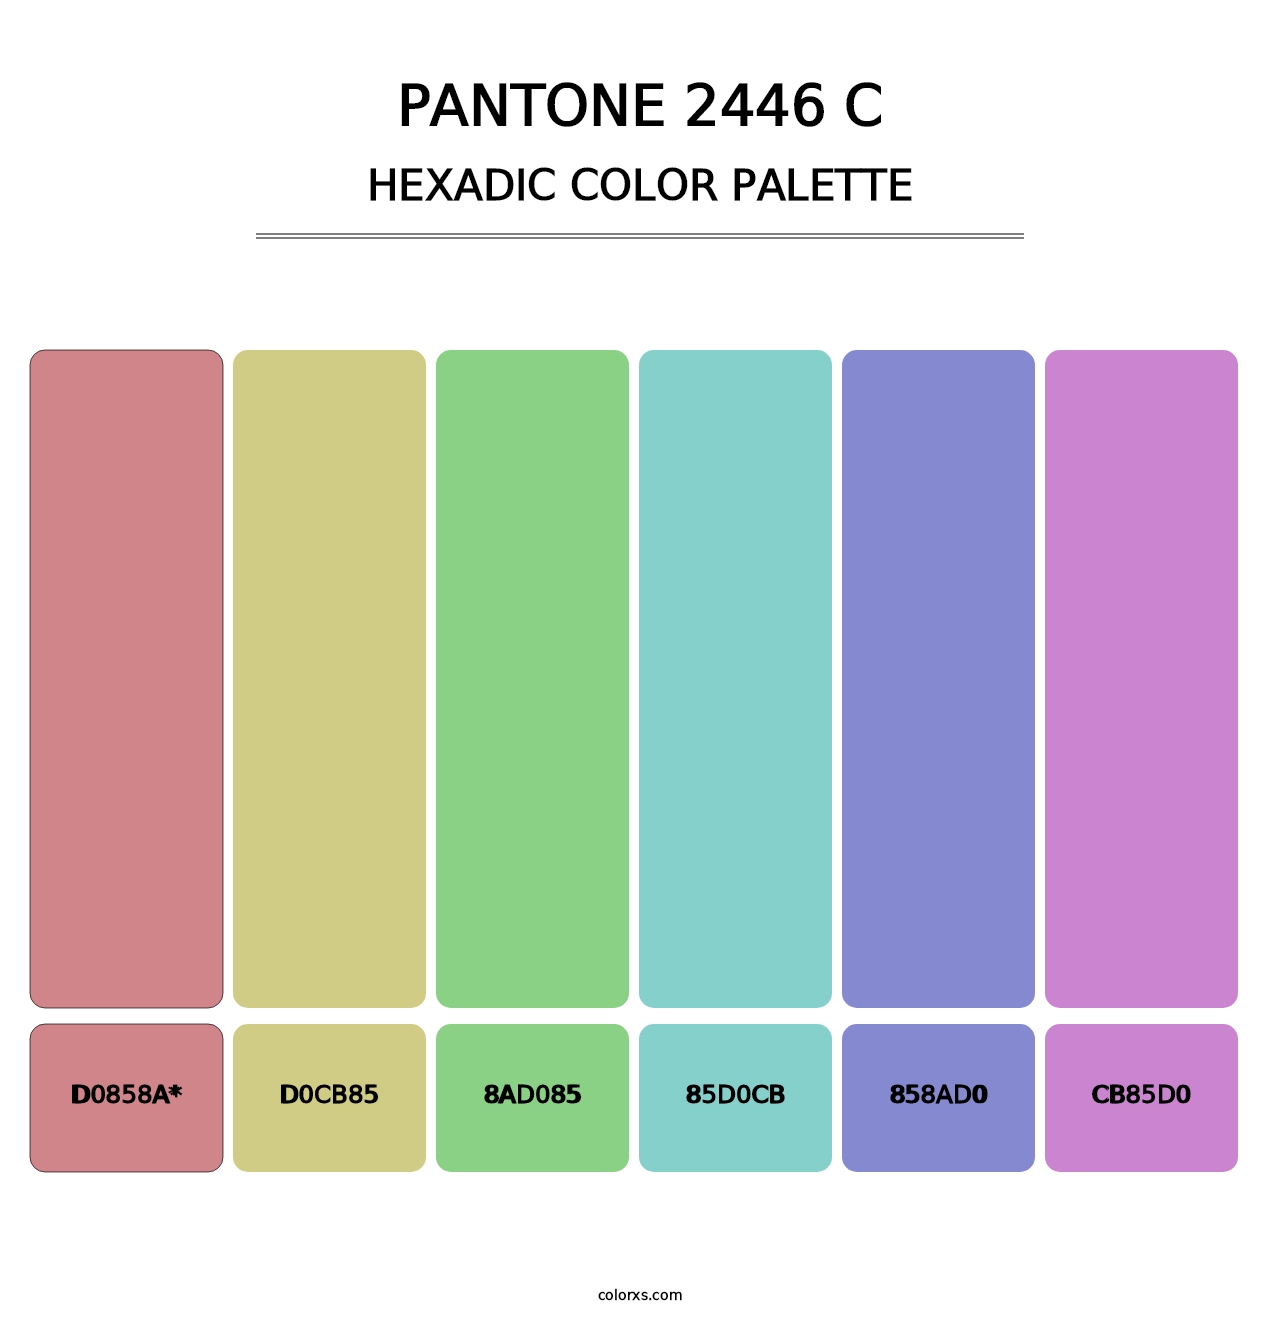 PANTONE 2446 C - Hexadic Color Palette